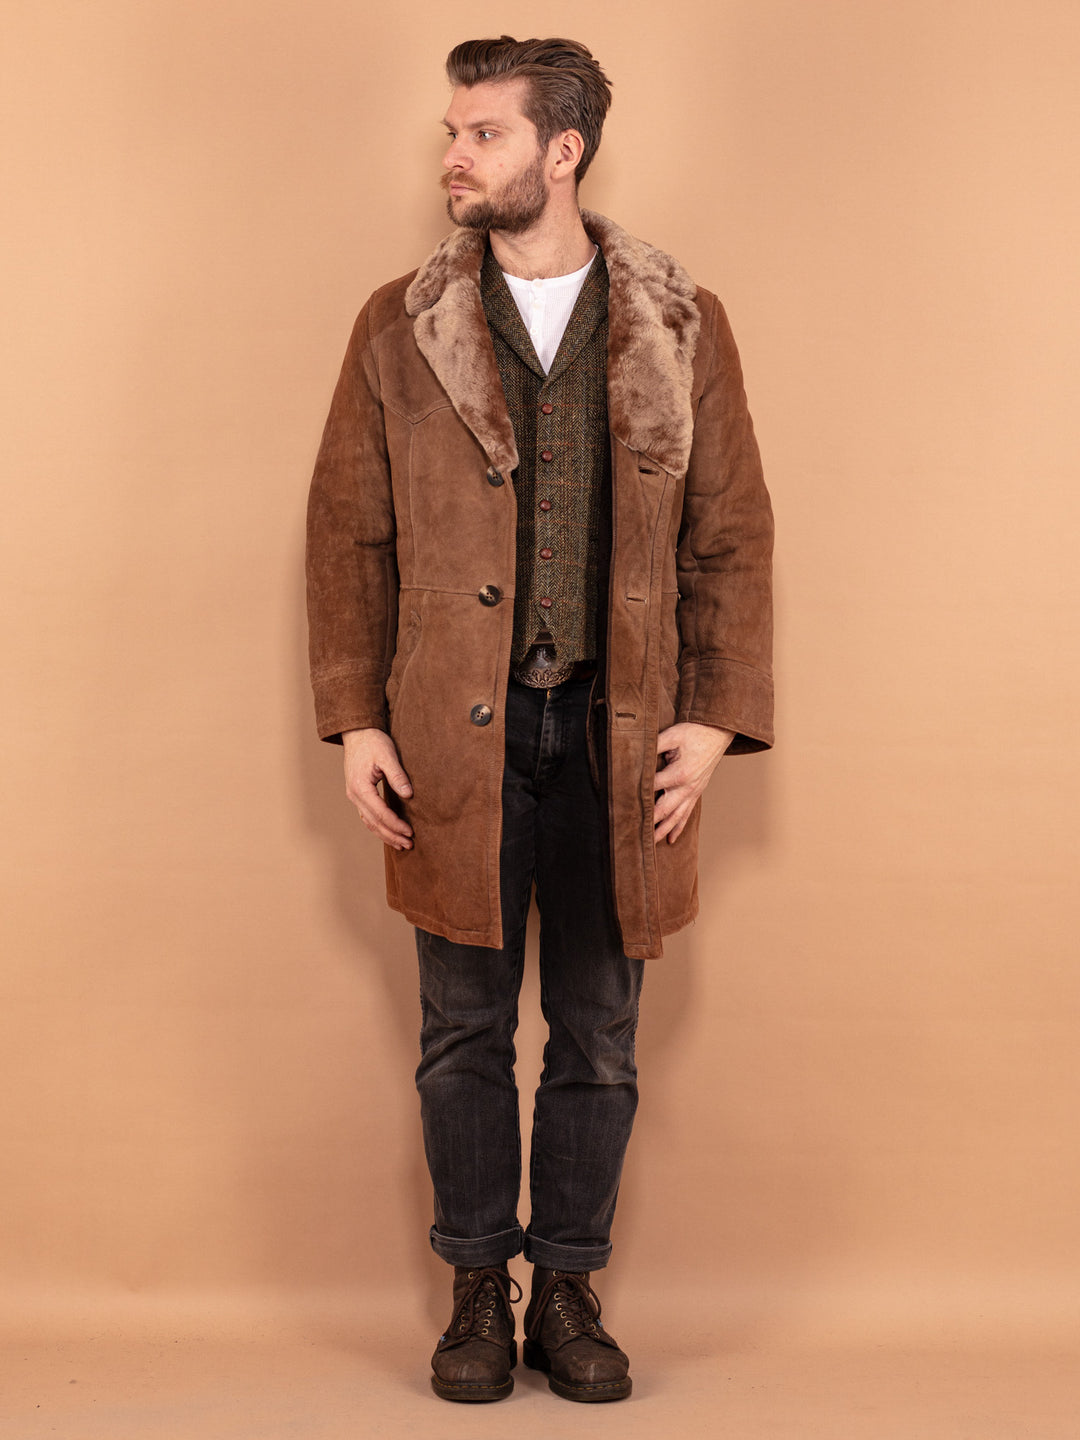 Western Sheepskin Coat 70's, Size M Medium, Sheepskin Overcoat, Cowboy Outerwear, Boho Winter Suede Coat, Brown Shearling Coat, 70s Menswear